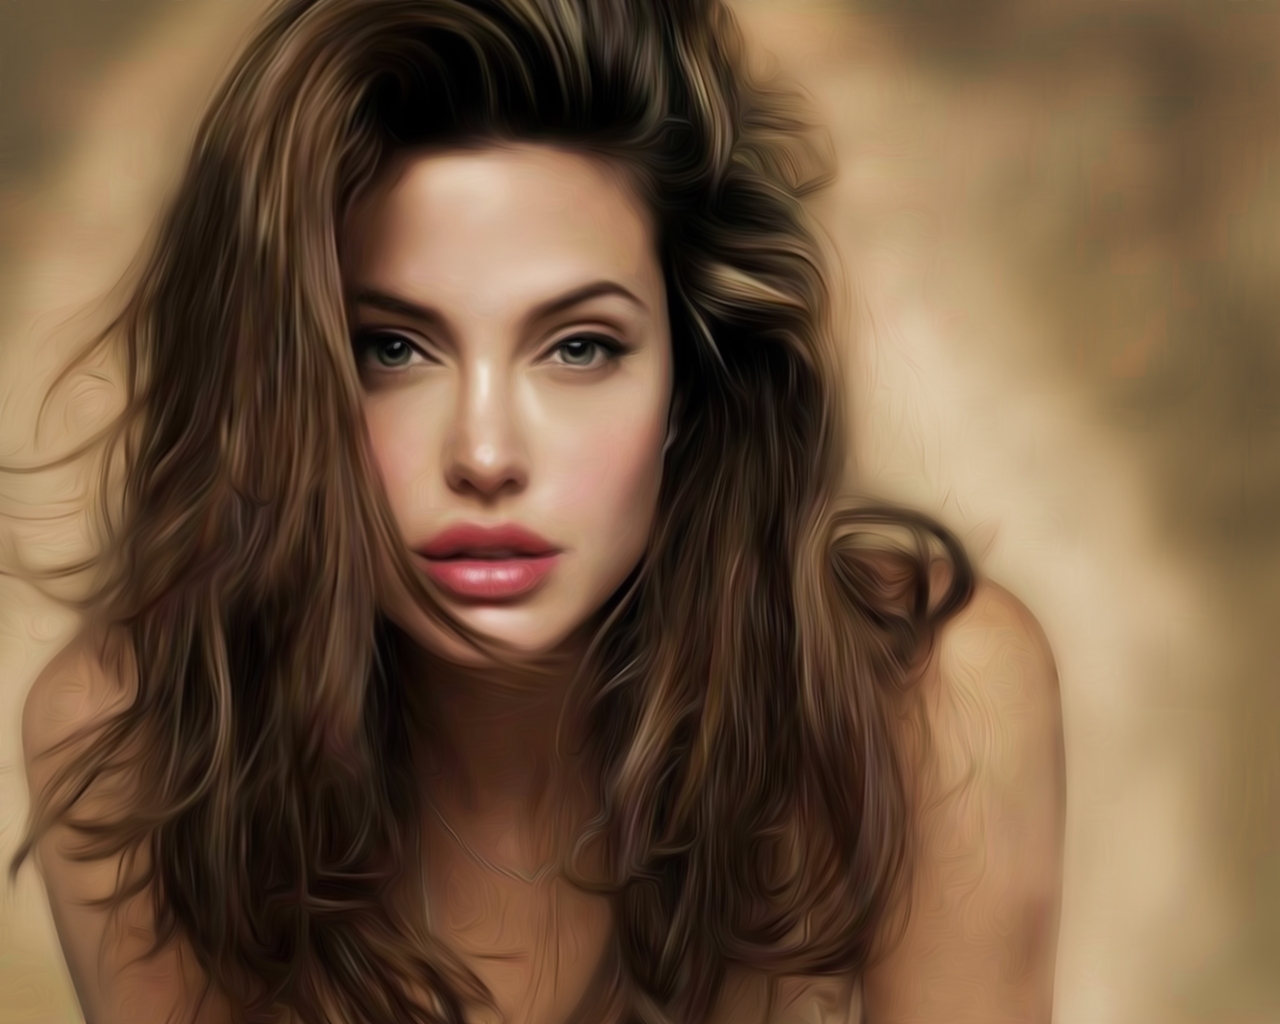 Angelina Jolie Look Art for 1280 x 1024 resolution